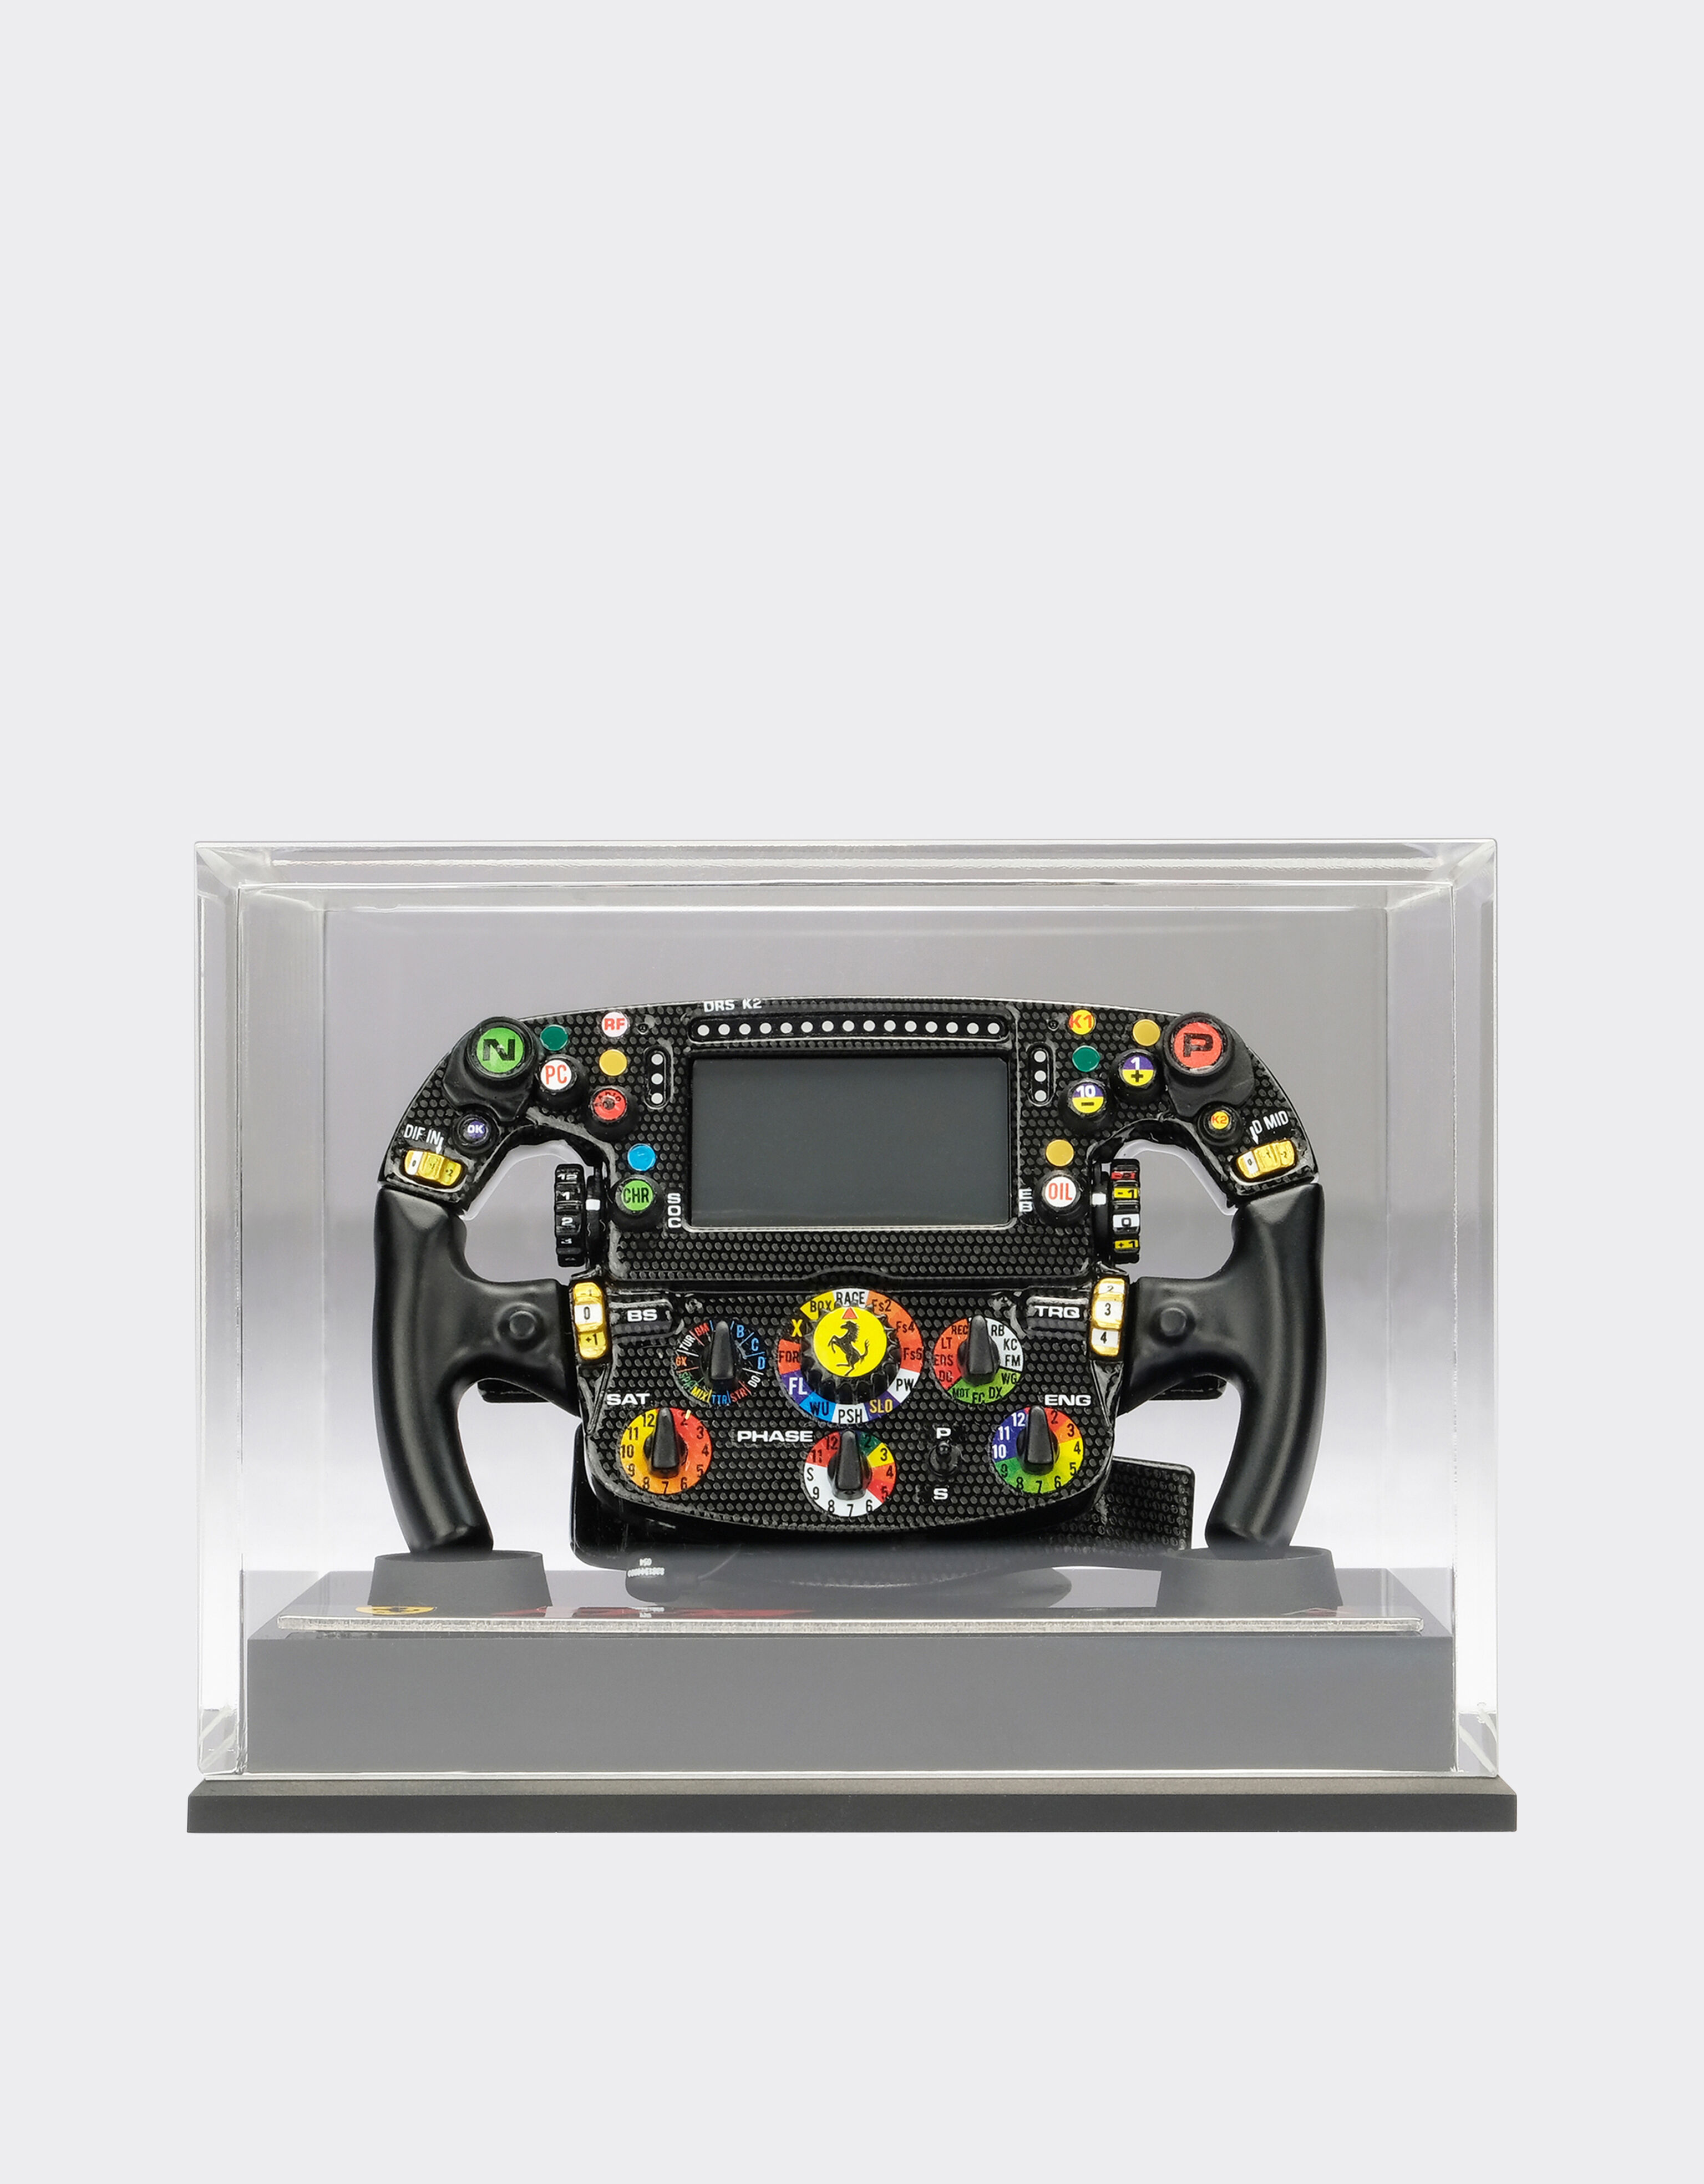 Ferrari Ferrari F1-75 Steering Wheel 1:4 scale model 黑色 F0668f